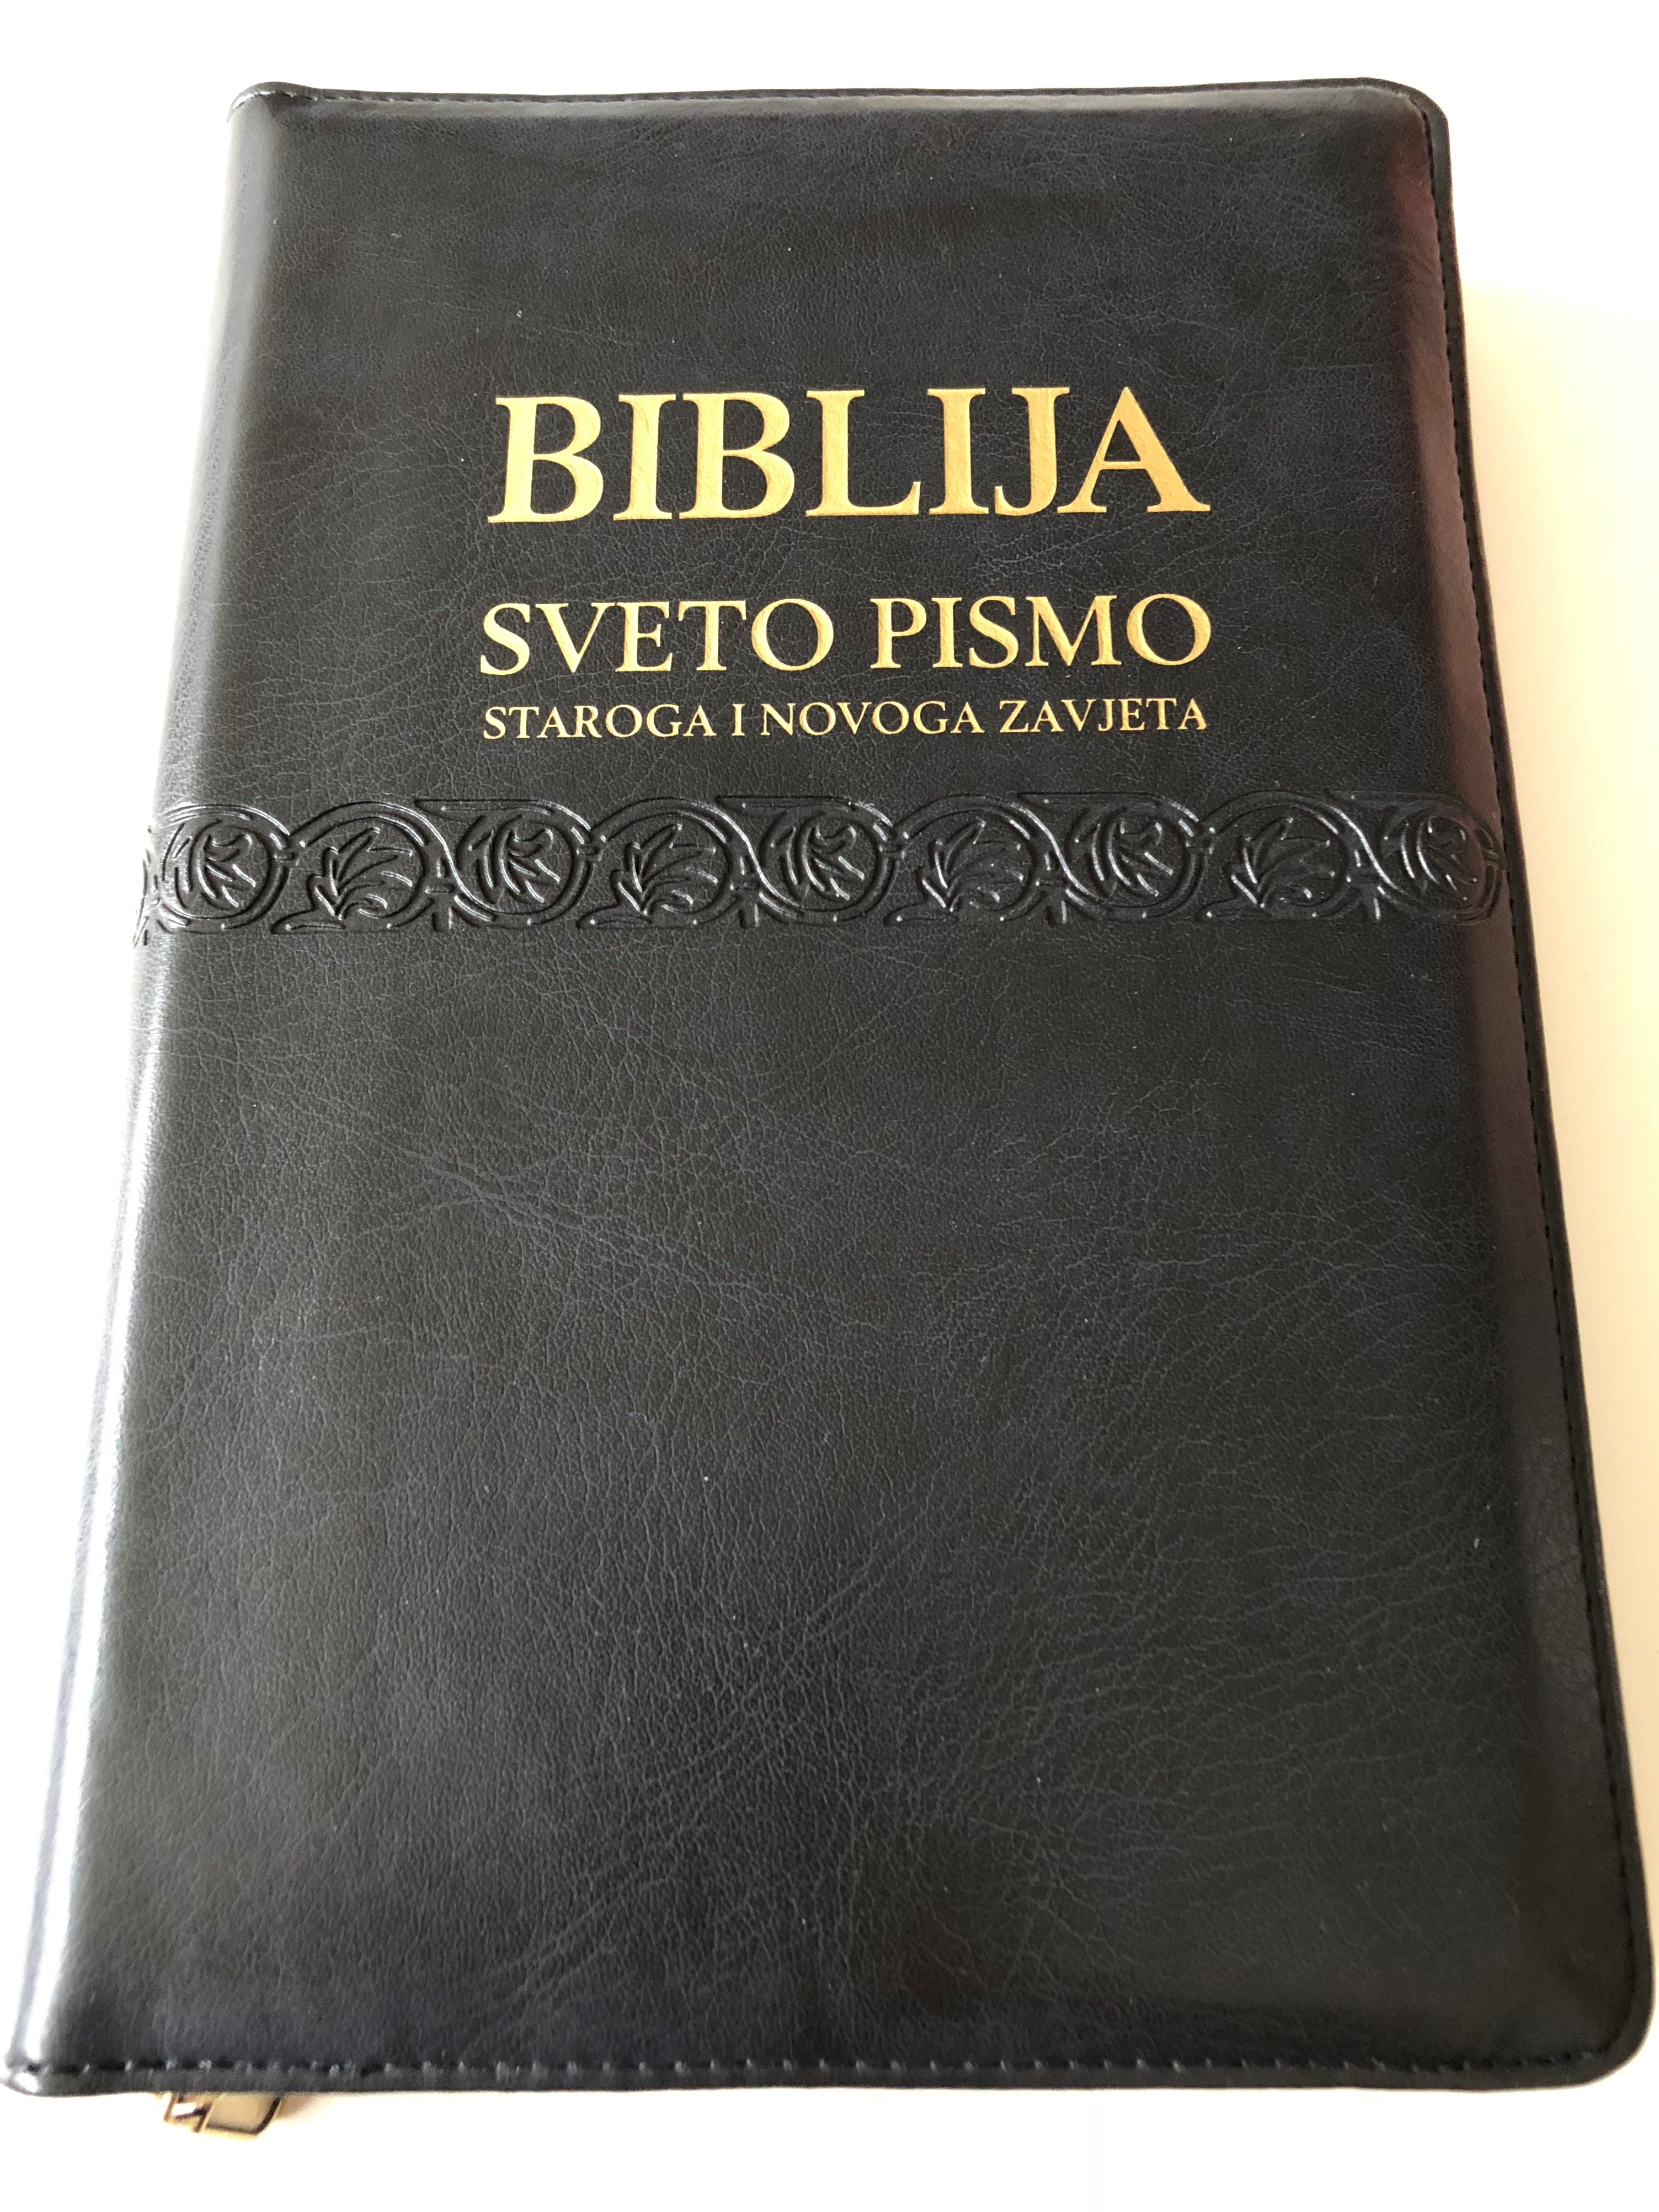 croatian-bible-black-leather-gold-index-zipper-i.saric-10th-ed-1-.jpg